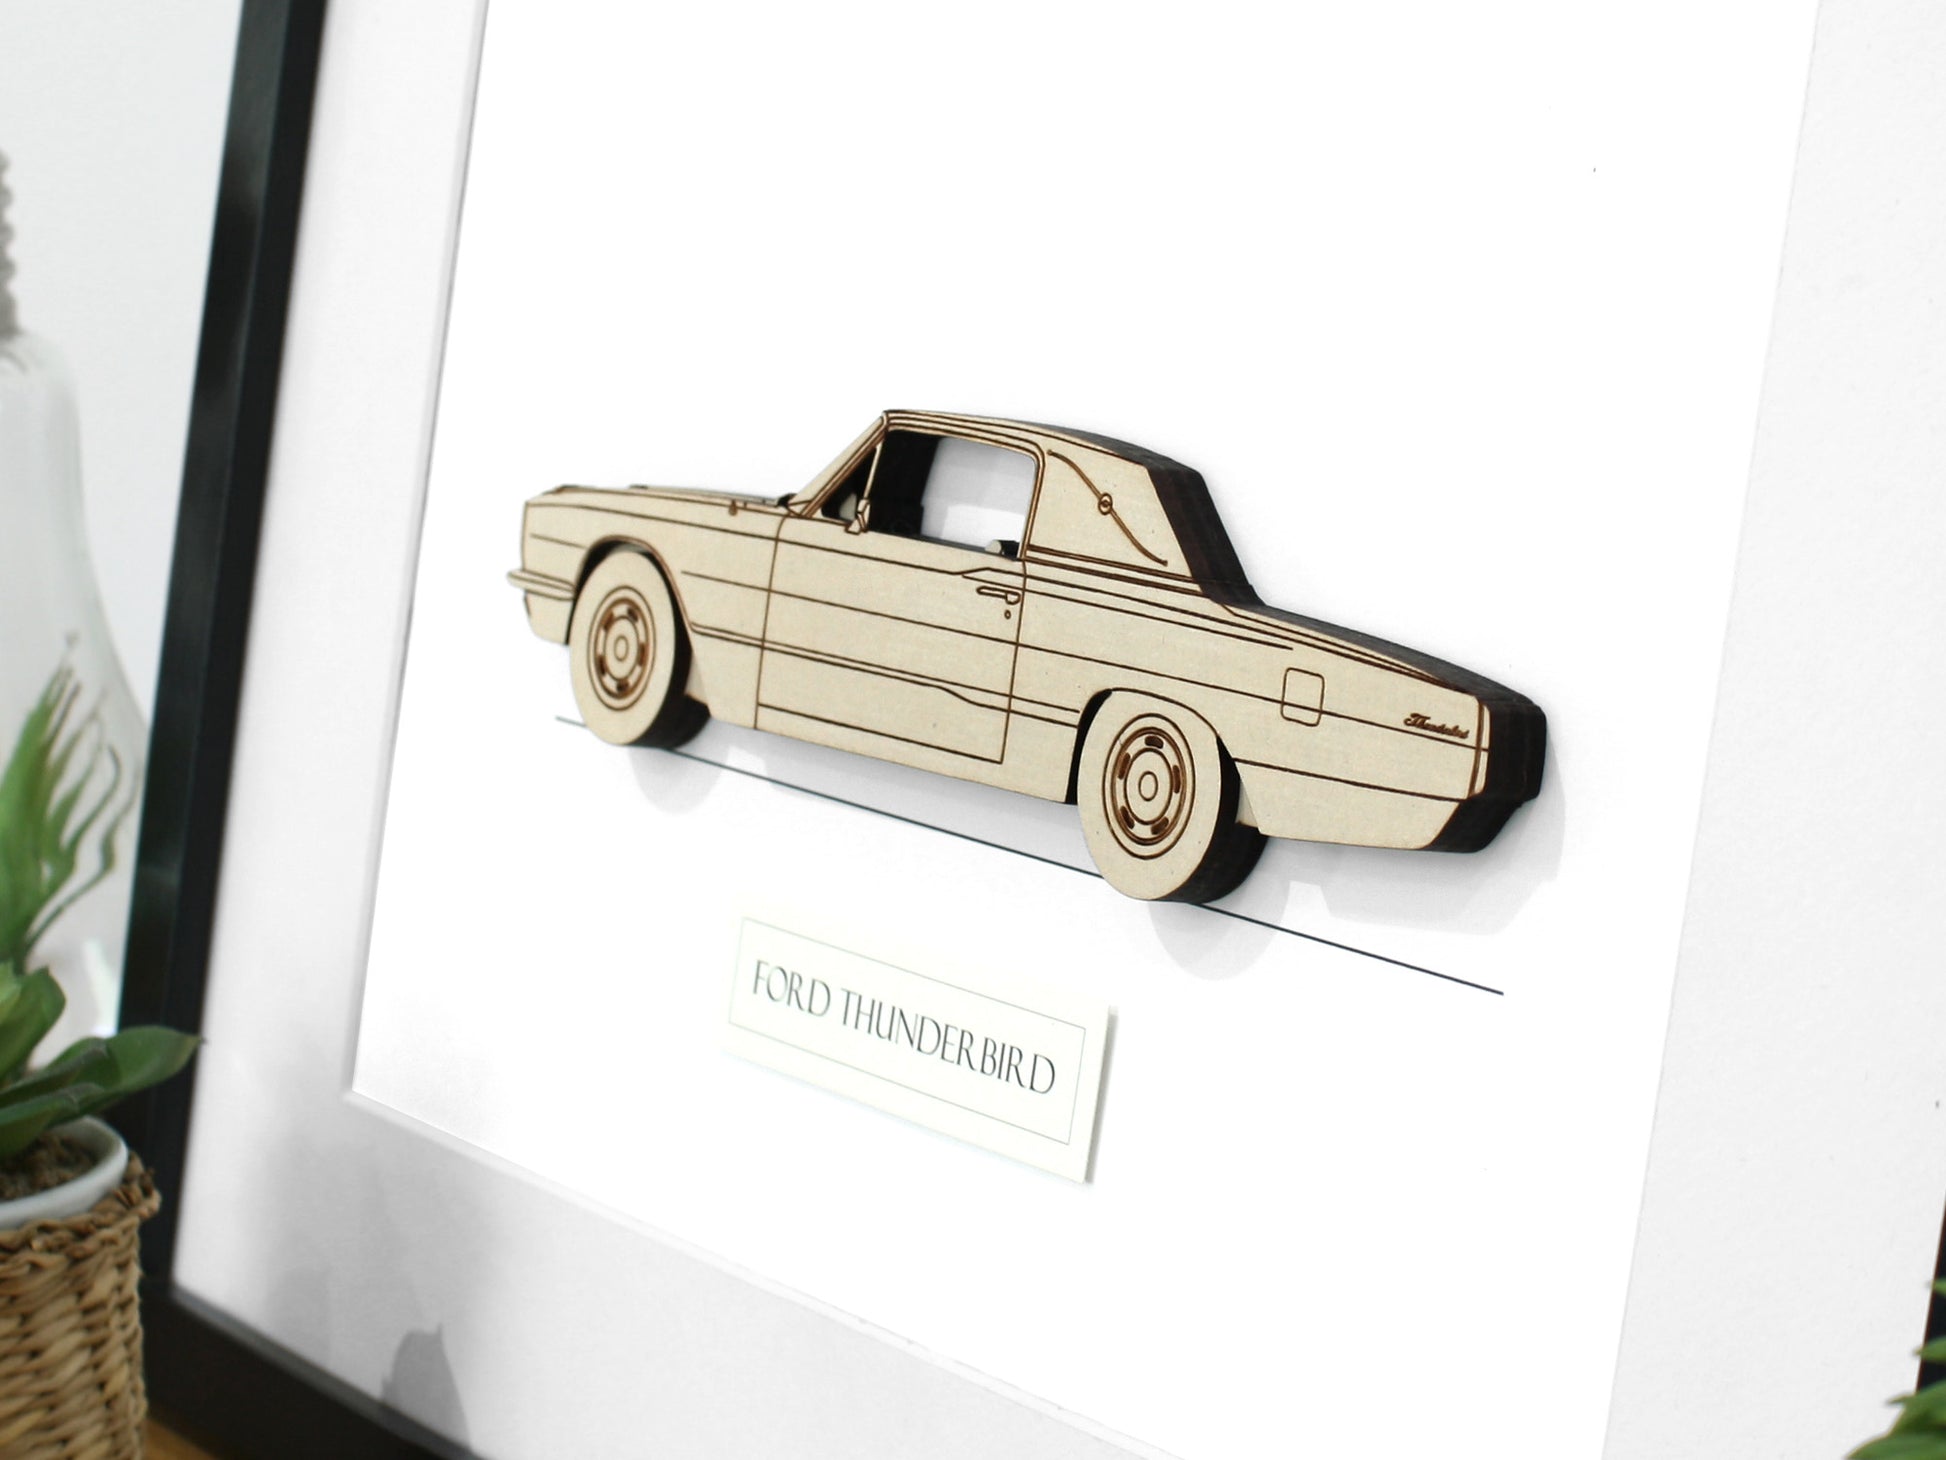 1964 - 1966 Ford Thunderbird automotive art